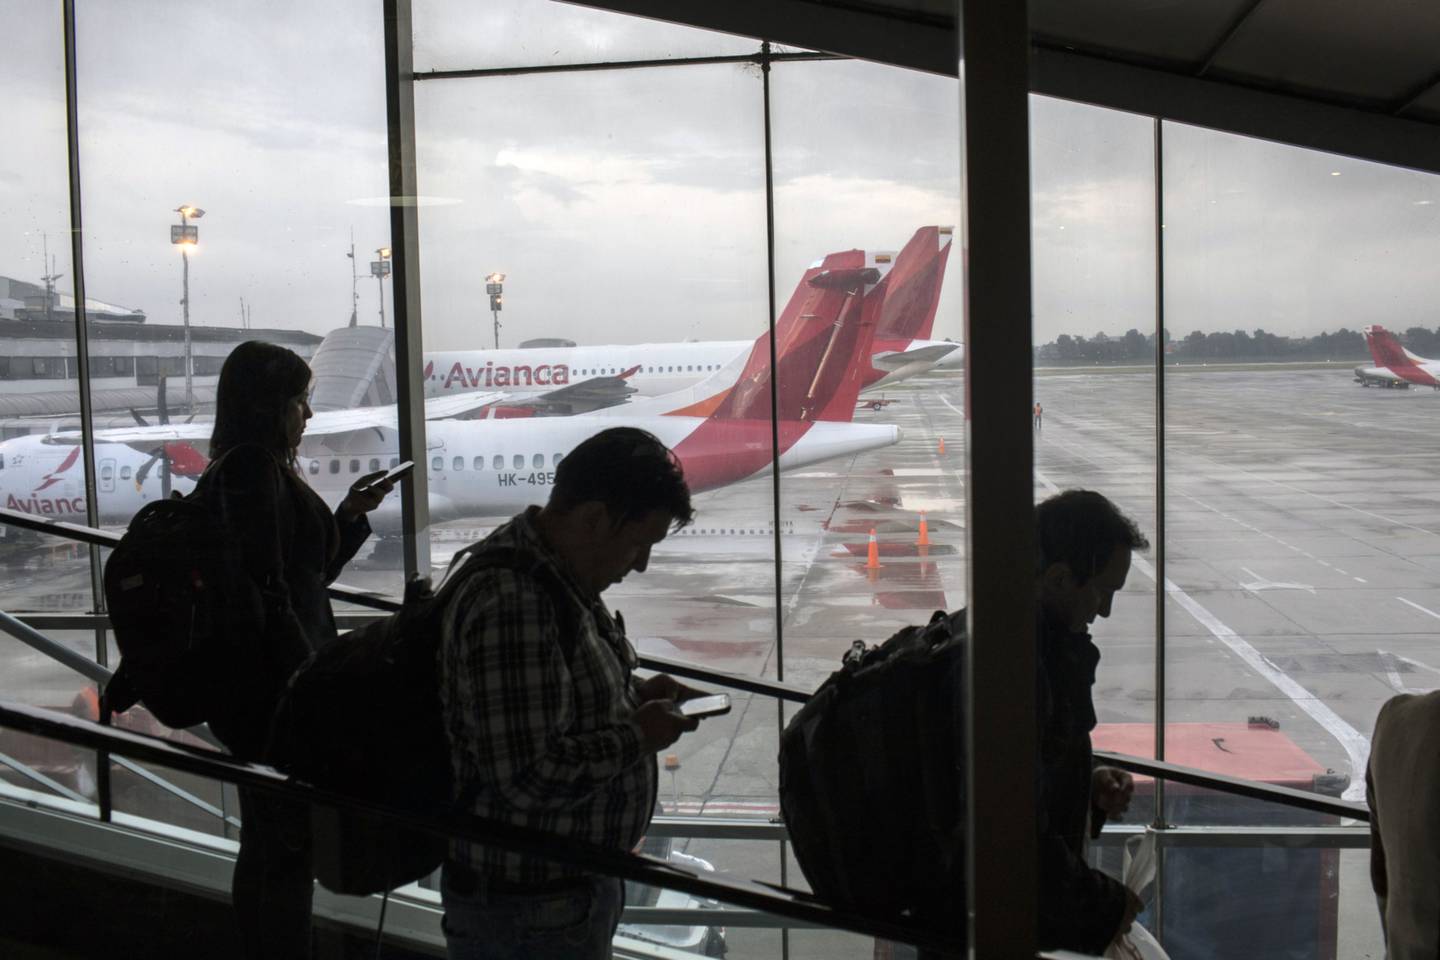 Passengers await departure in Bogotá's El Dorado International Airport.